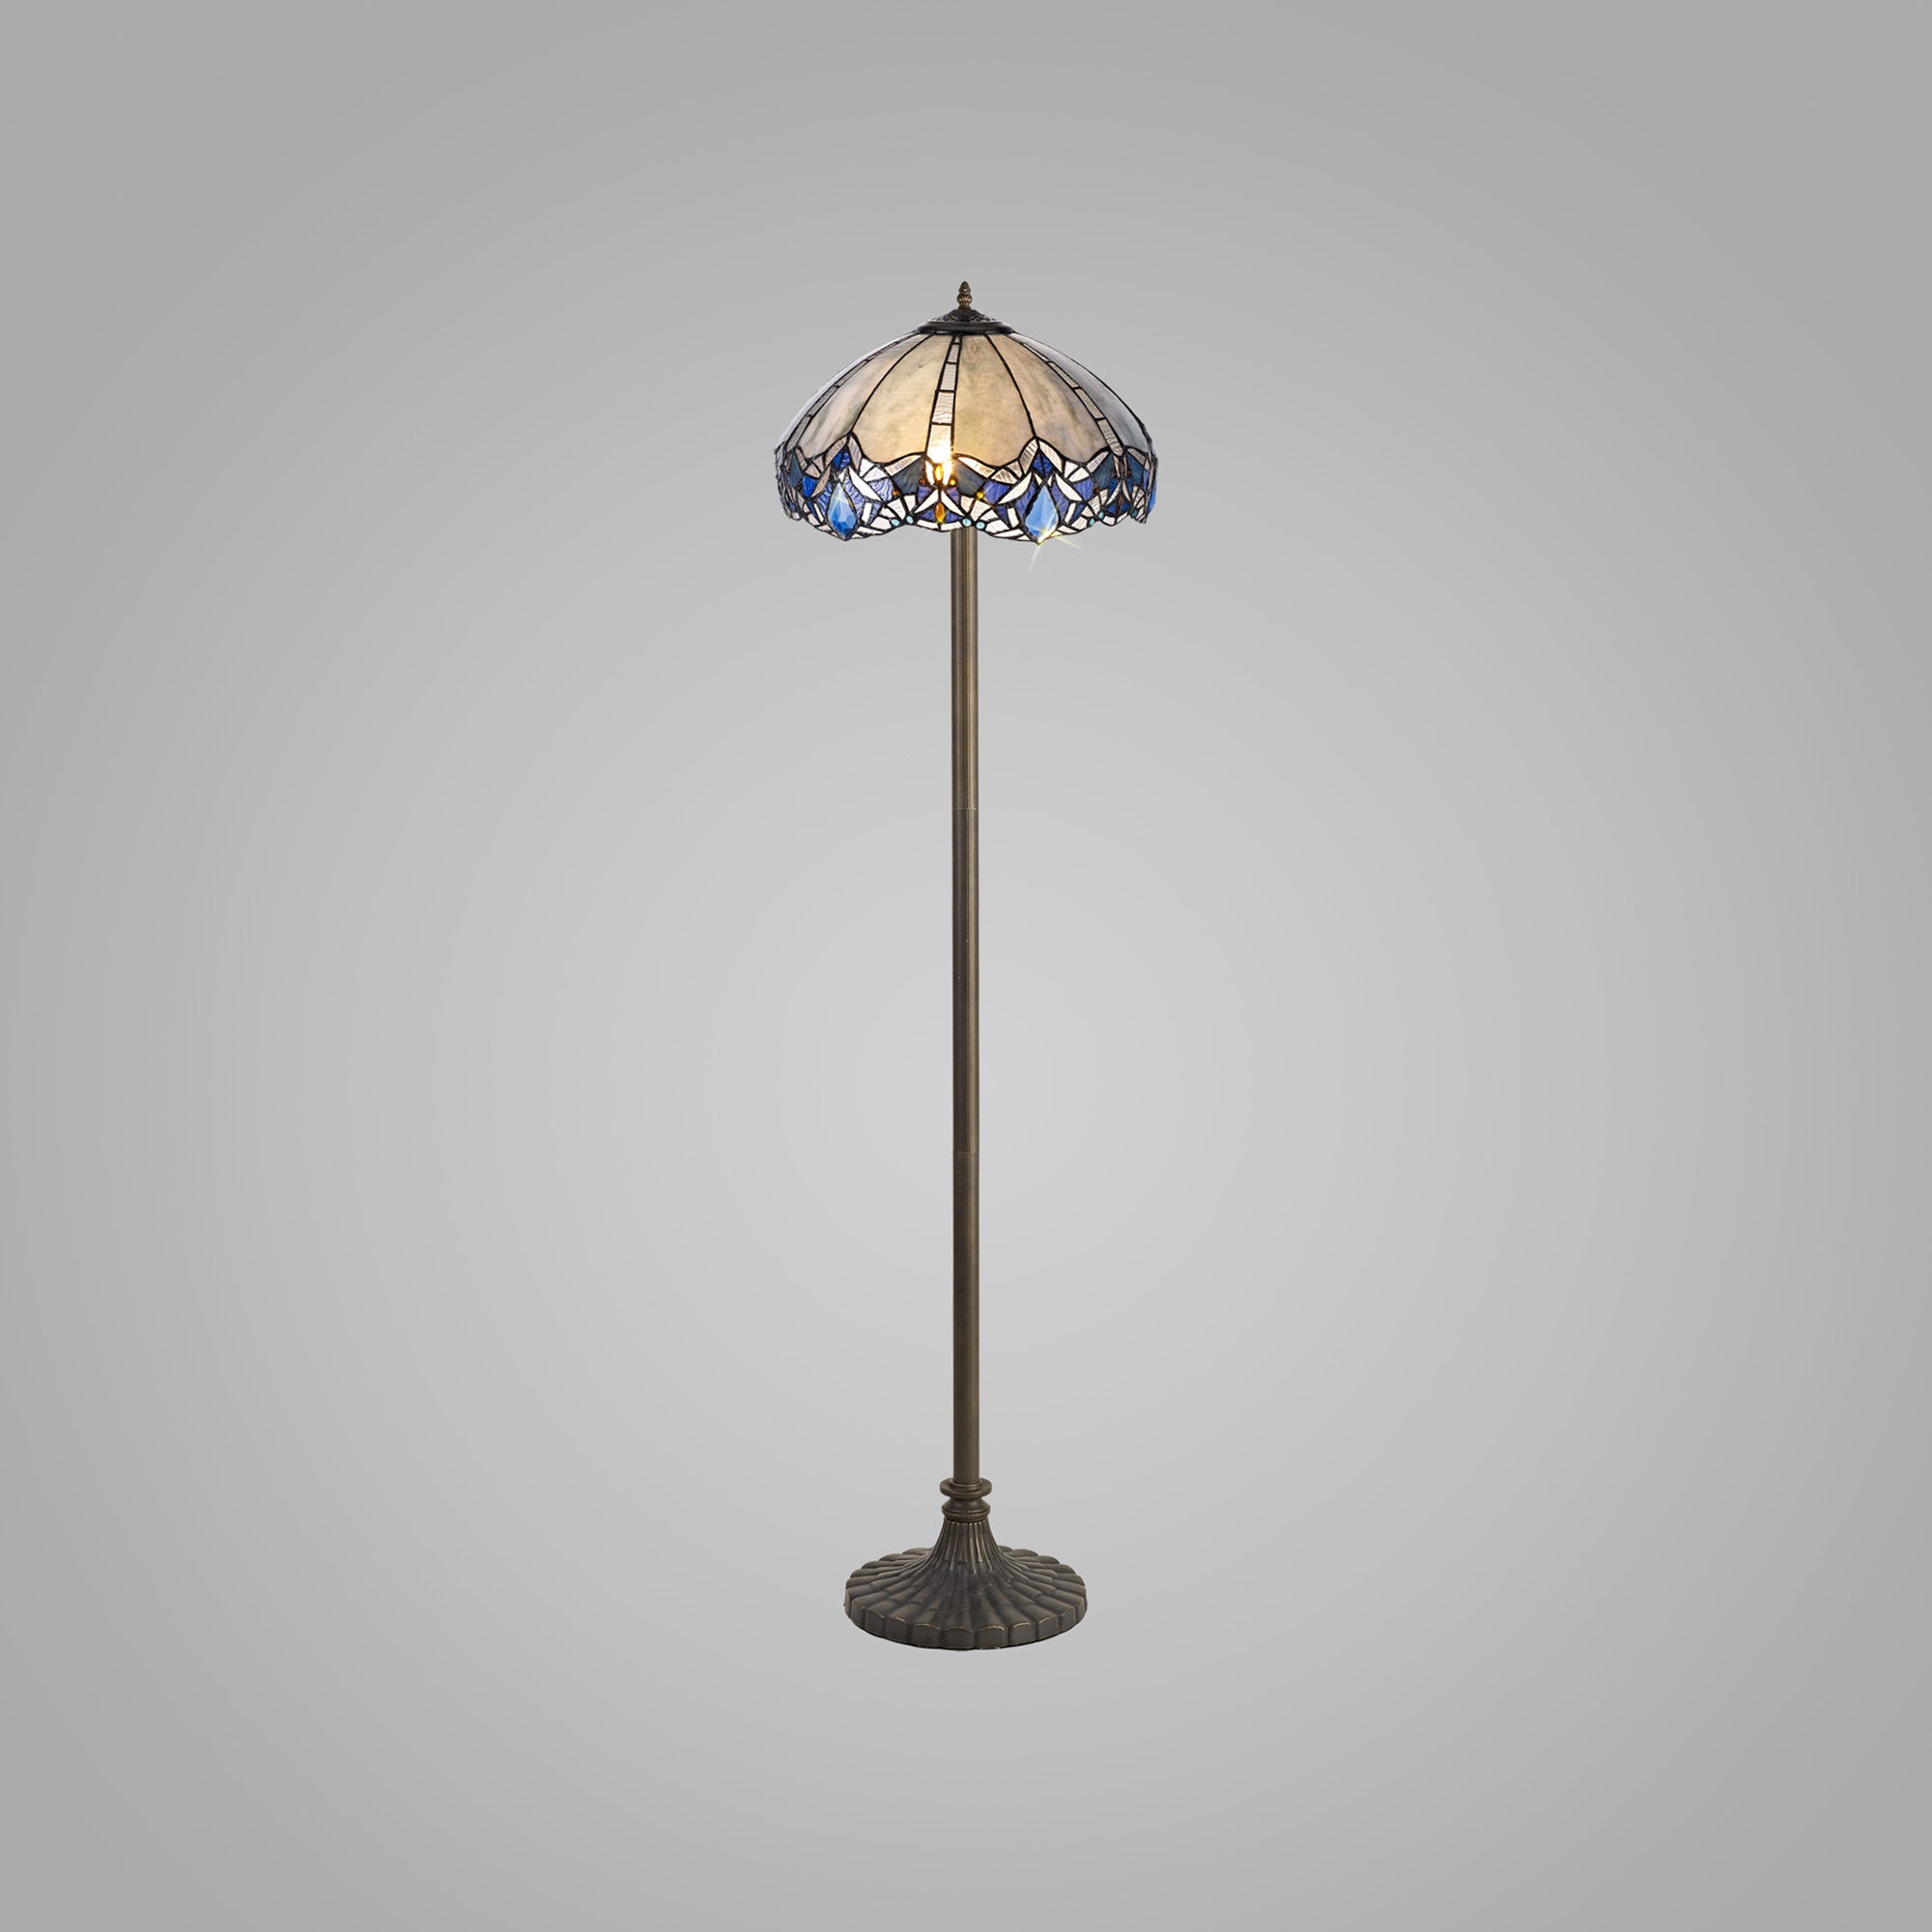 Oksana 2 Light Leaf/Octagonal/Stepped Design Floor Lamp E27 With 40cm Tiffany Shade, Blue & Clear Crystal & Aged Antique Brass